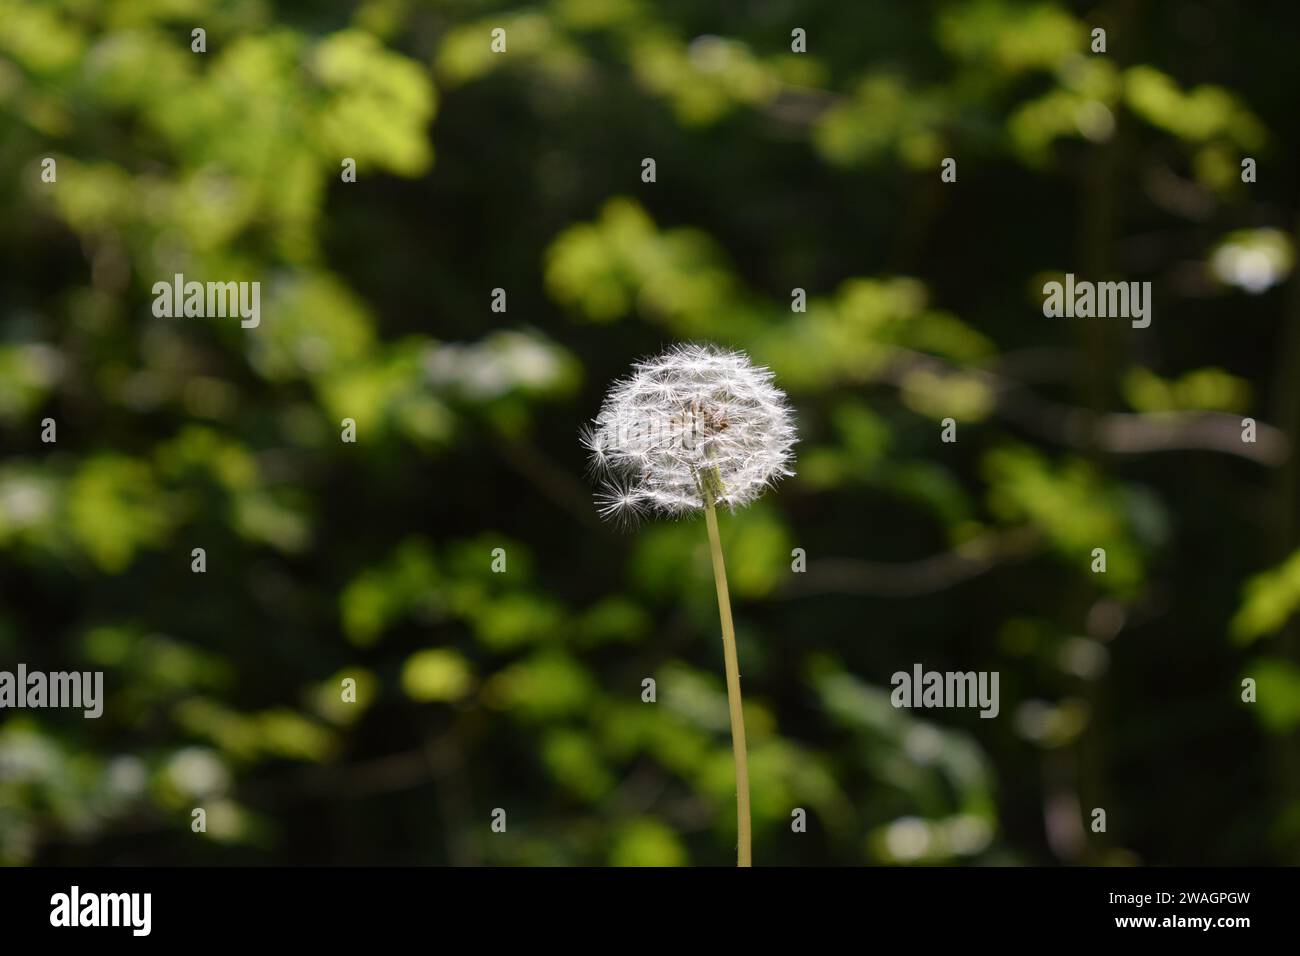 A close up of a dandelion seedhead Stock Photo